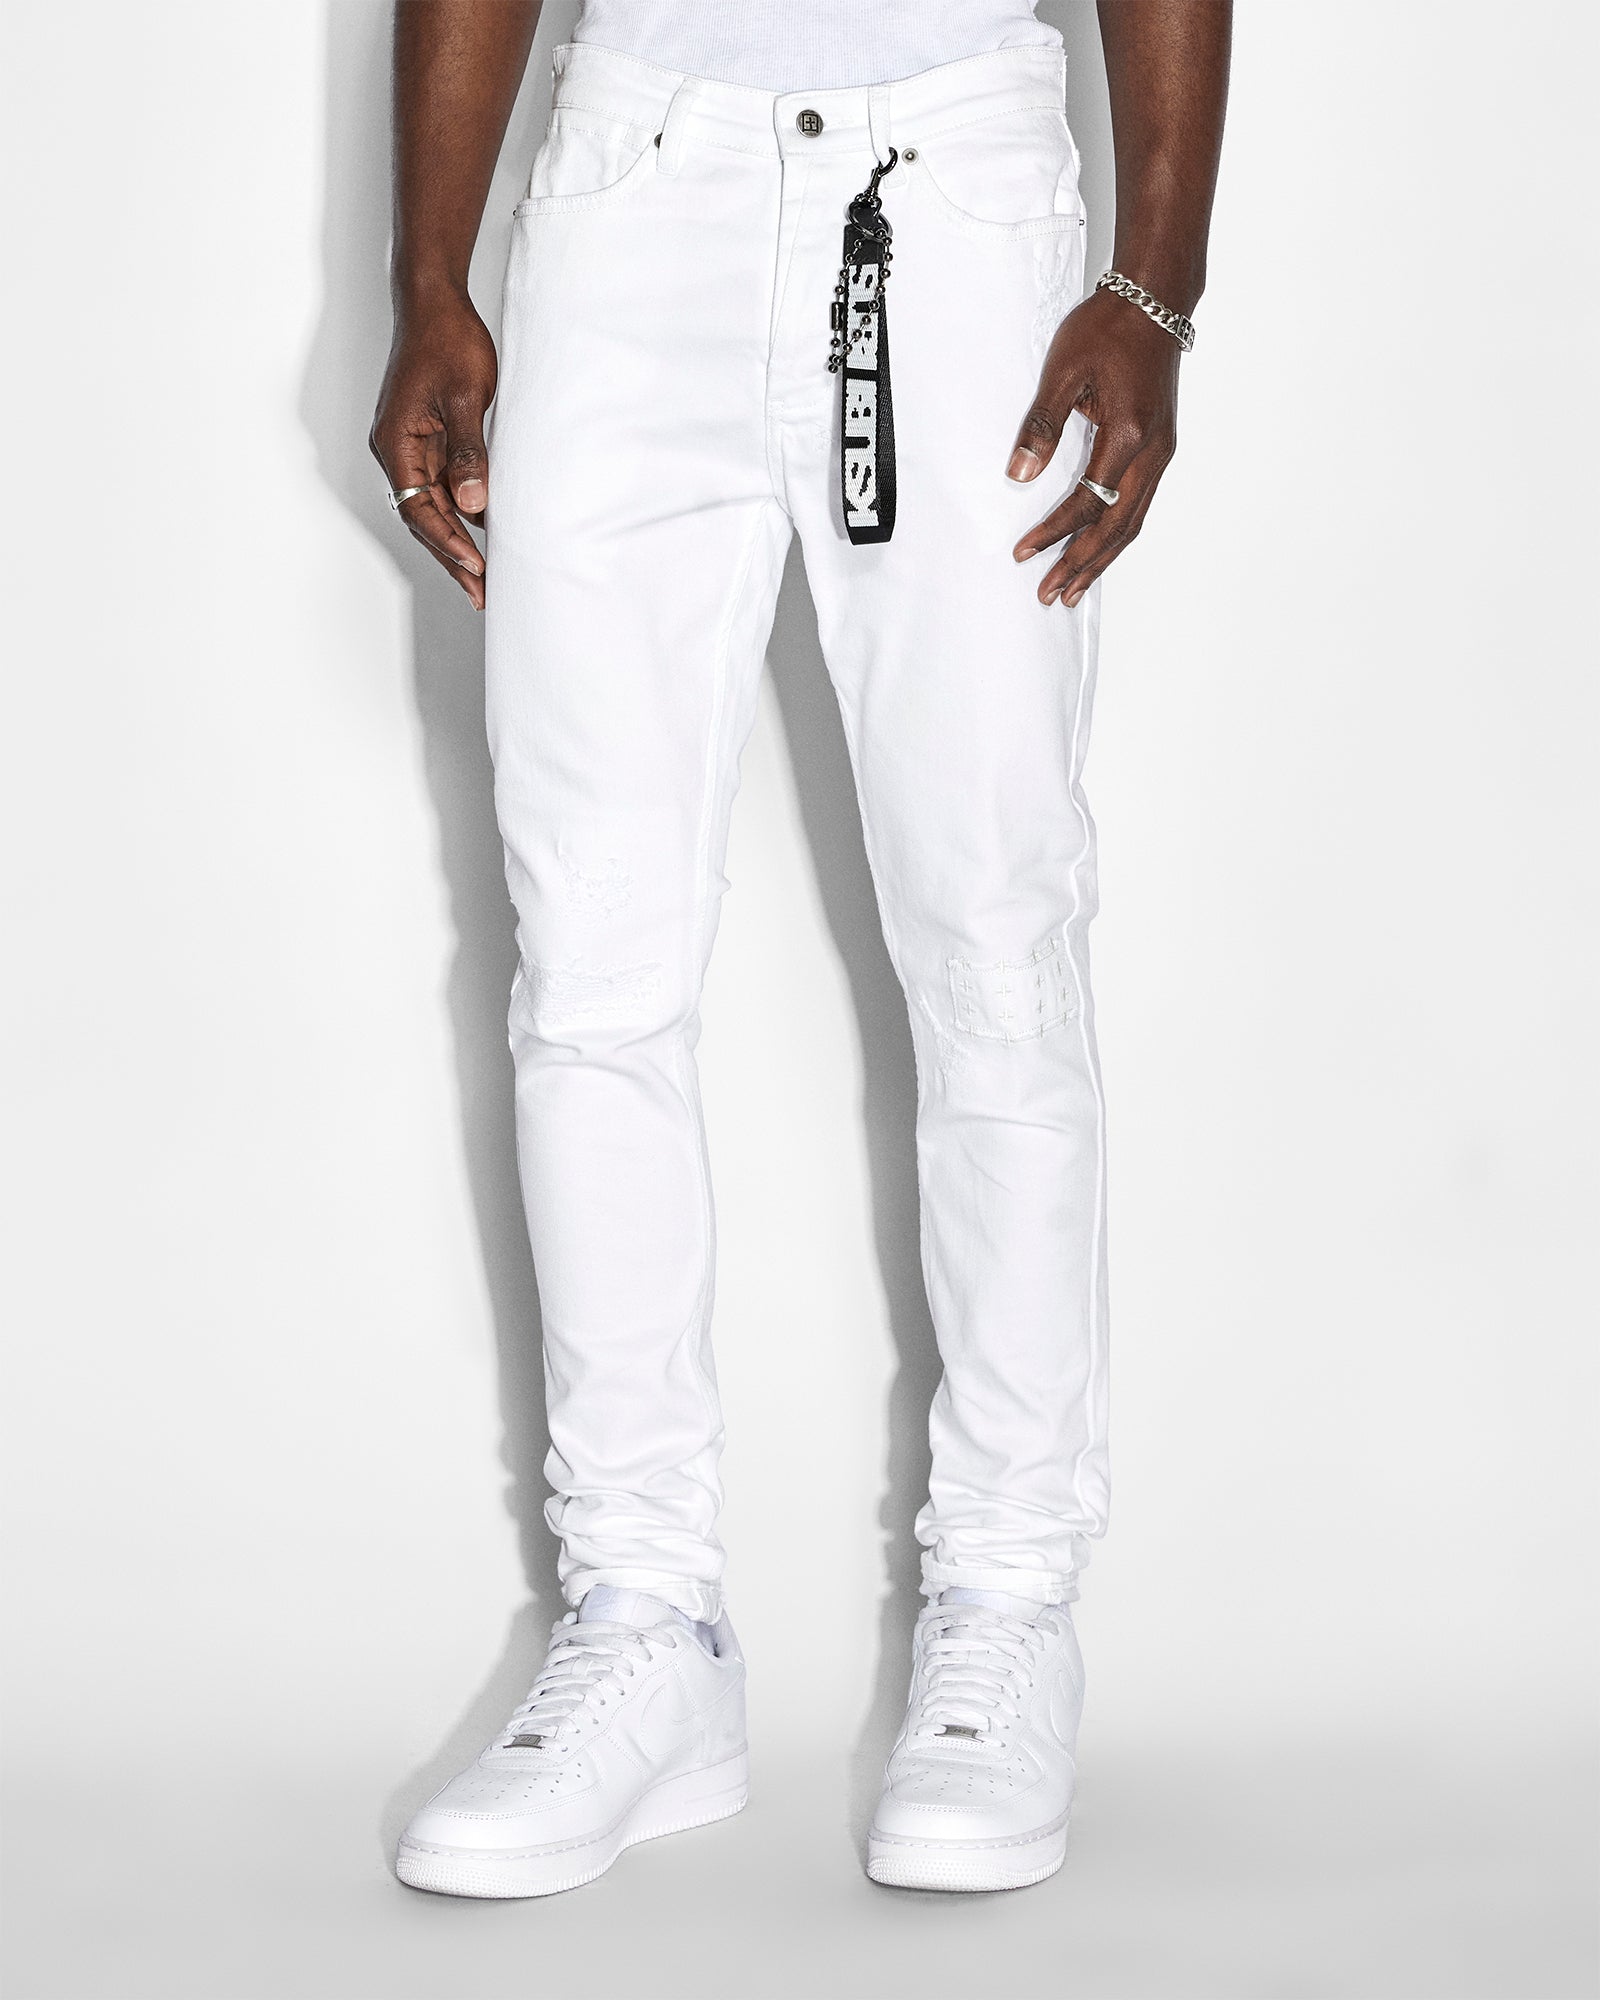 Buy White Jeans & Jeggings for Women by ZHEIA Online | Ajio.com